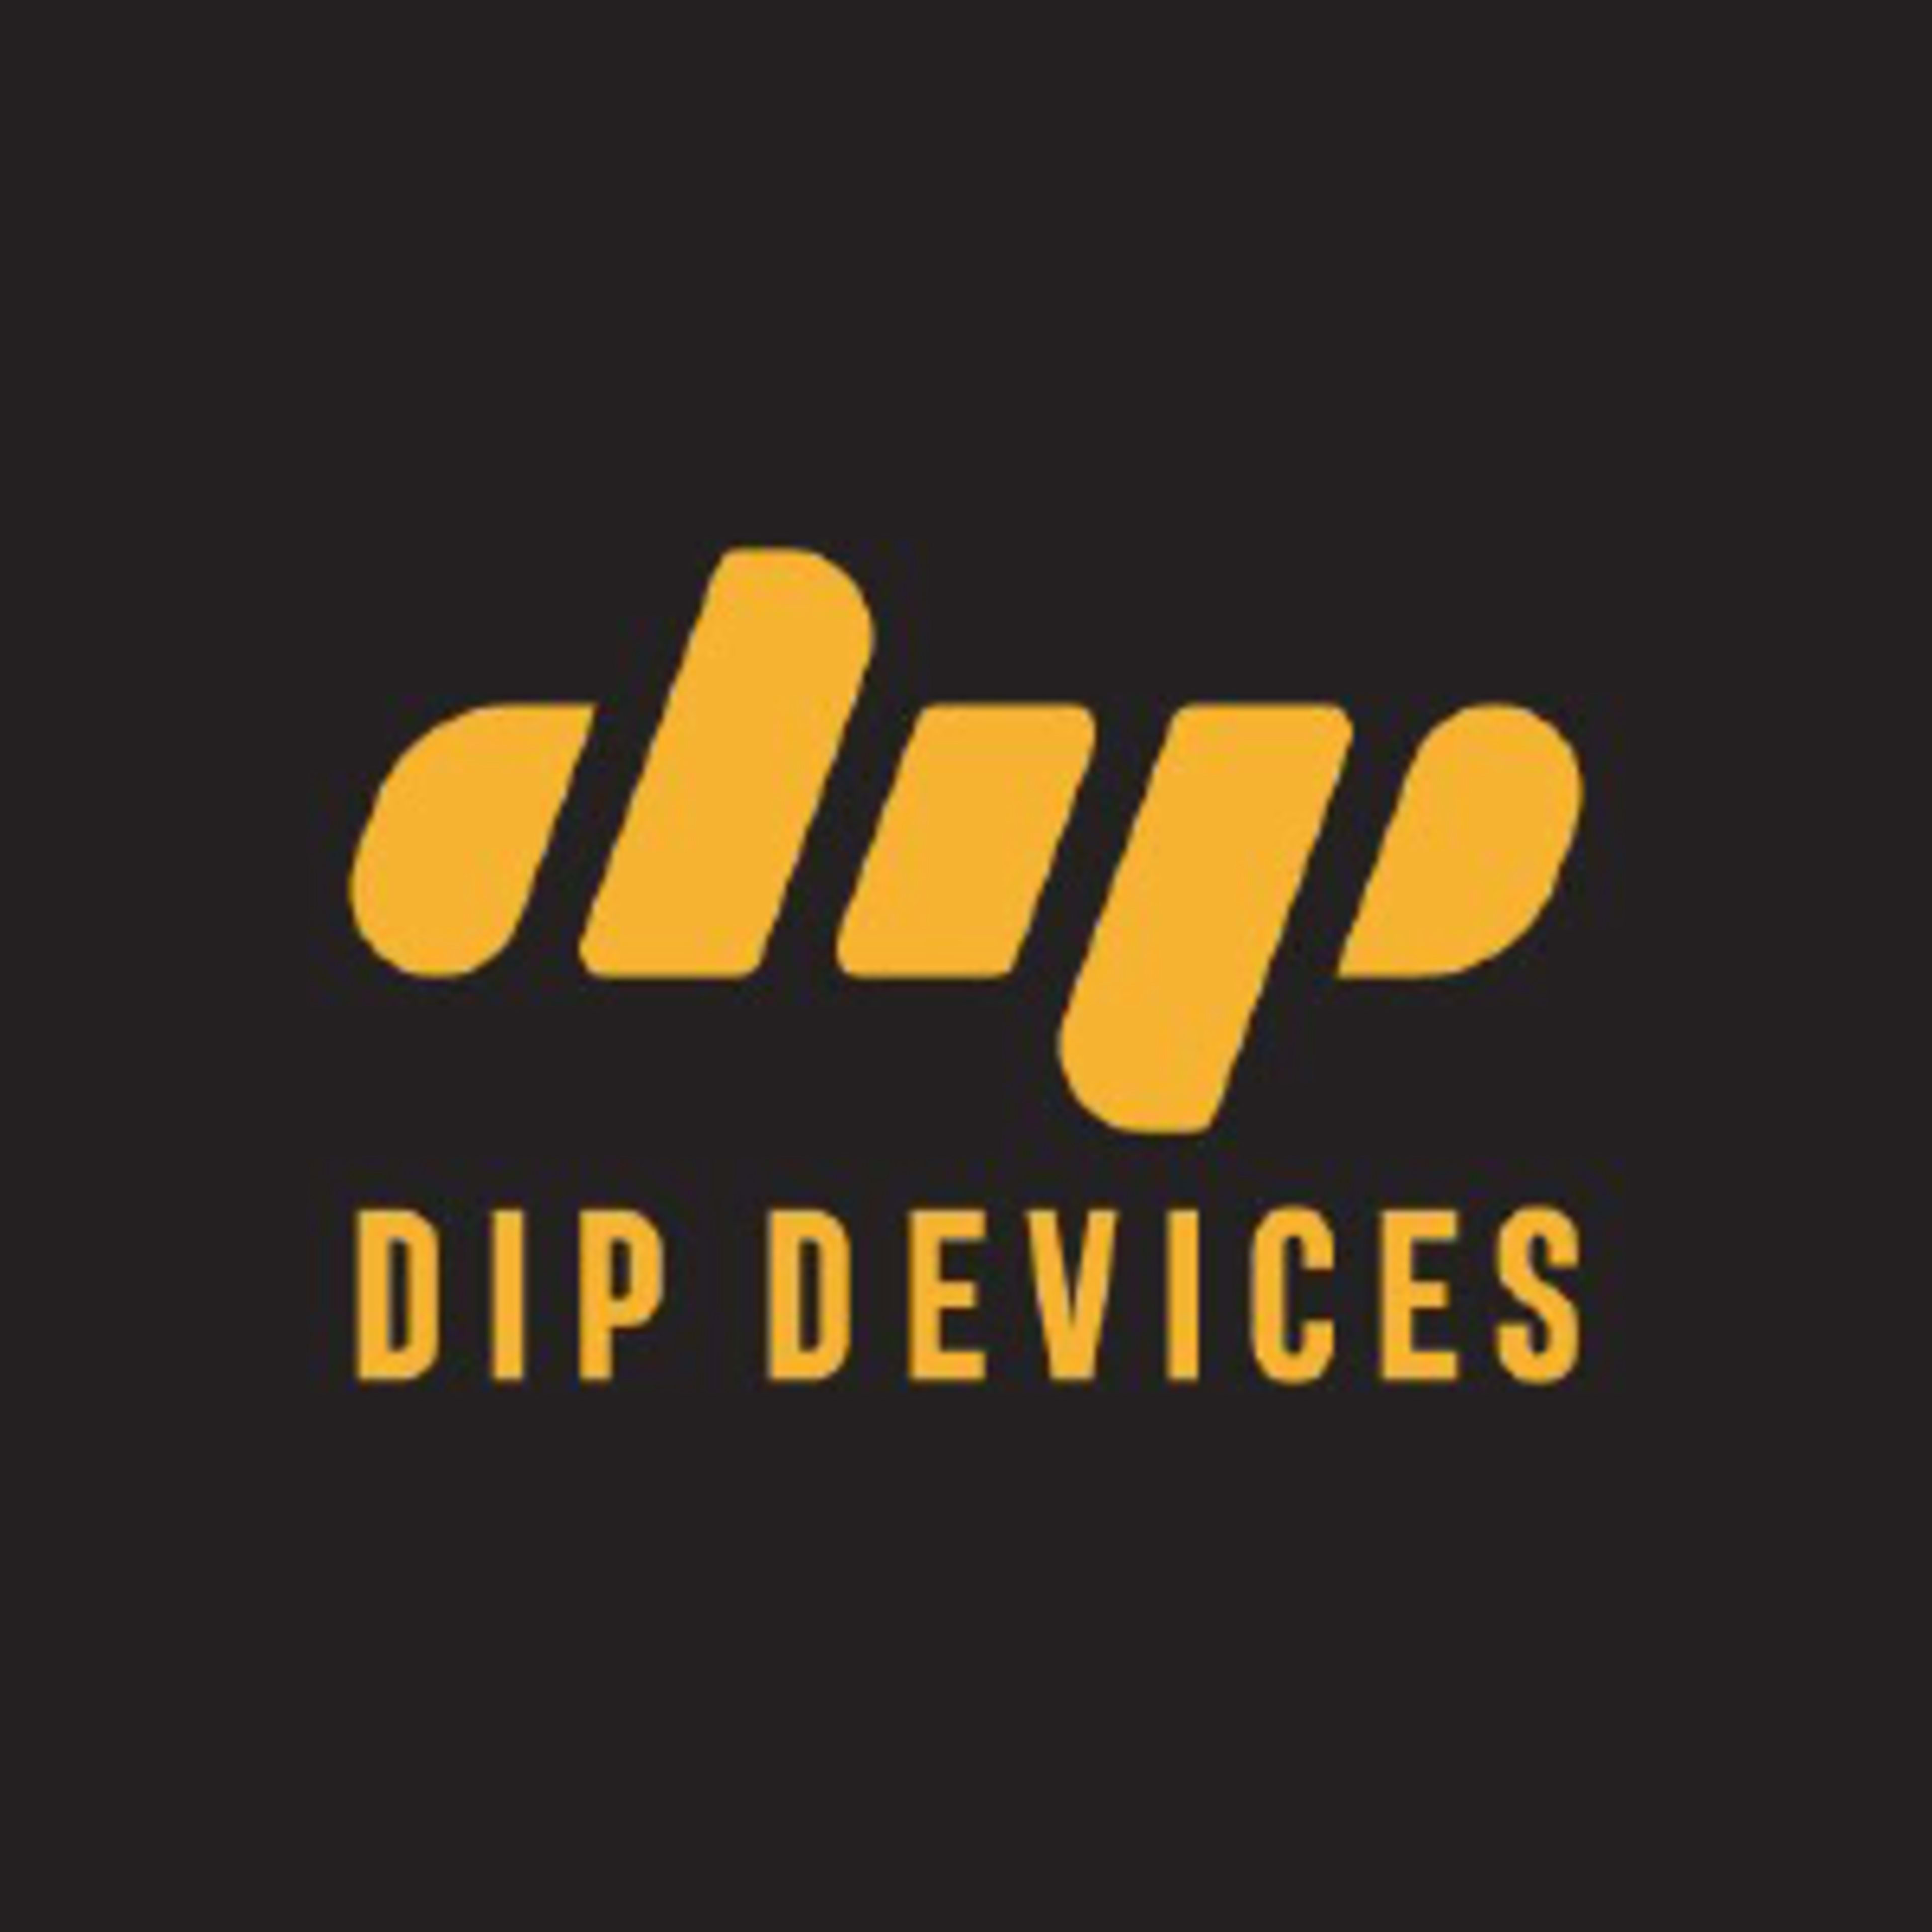 Dip DevicesCode